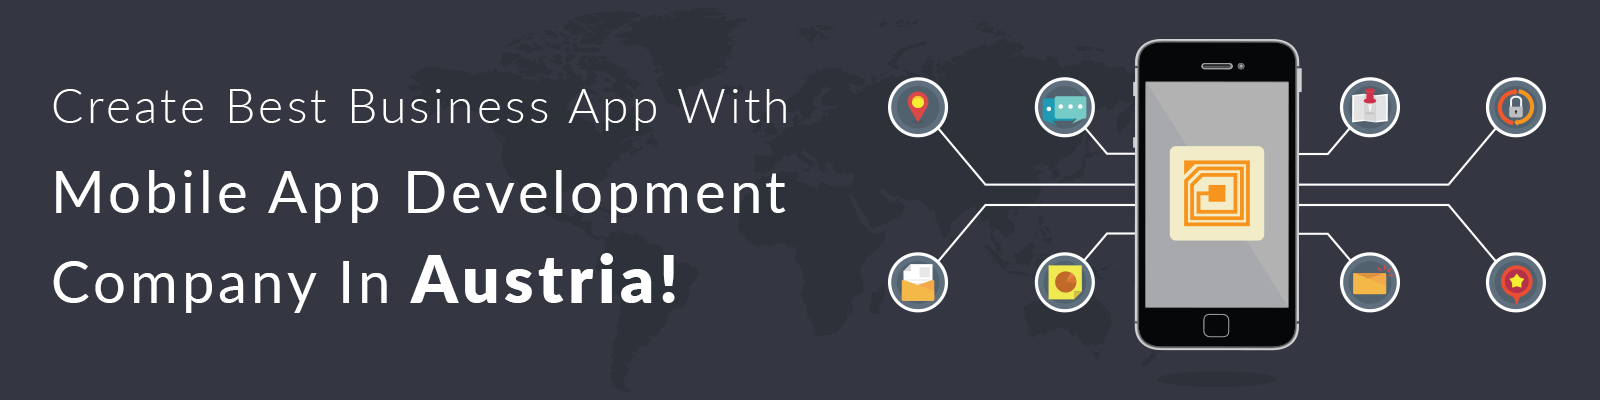 mobile app development company austria